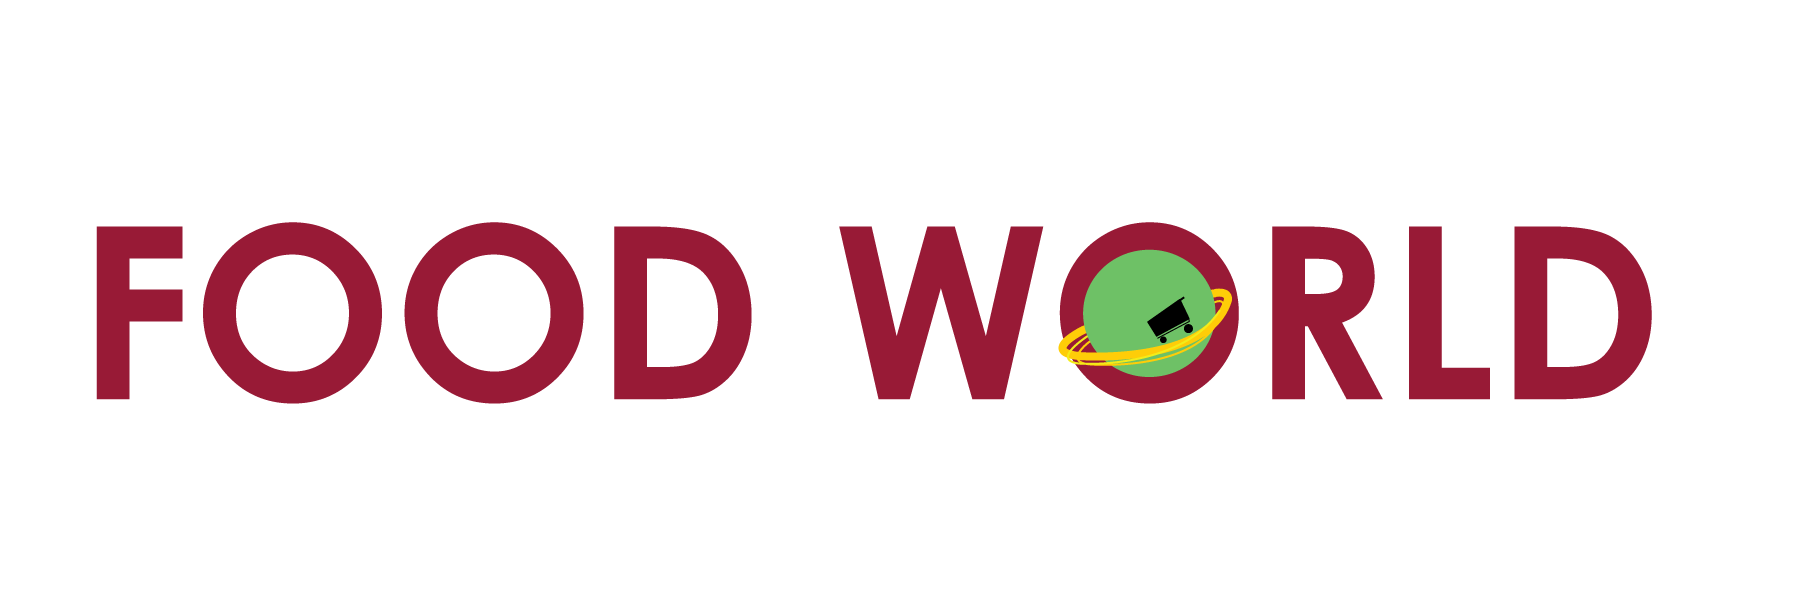 Food World Logo - Food World Durham in International foods in the RDU area